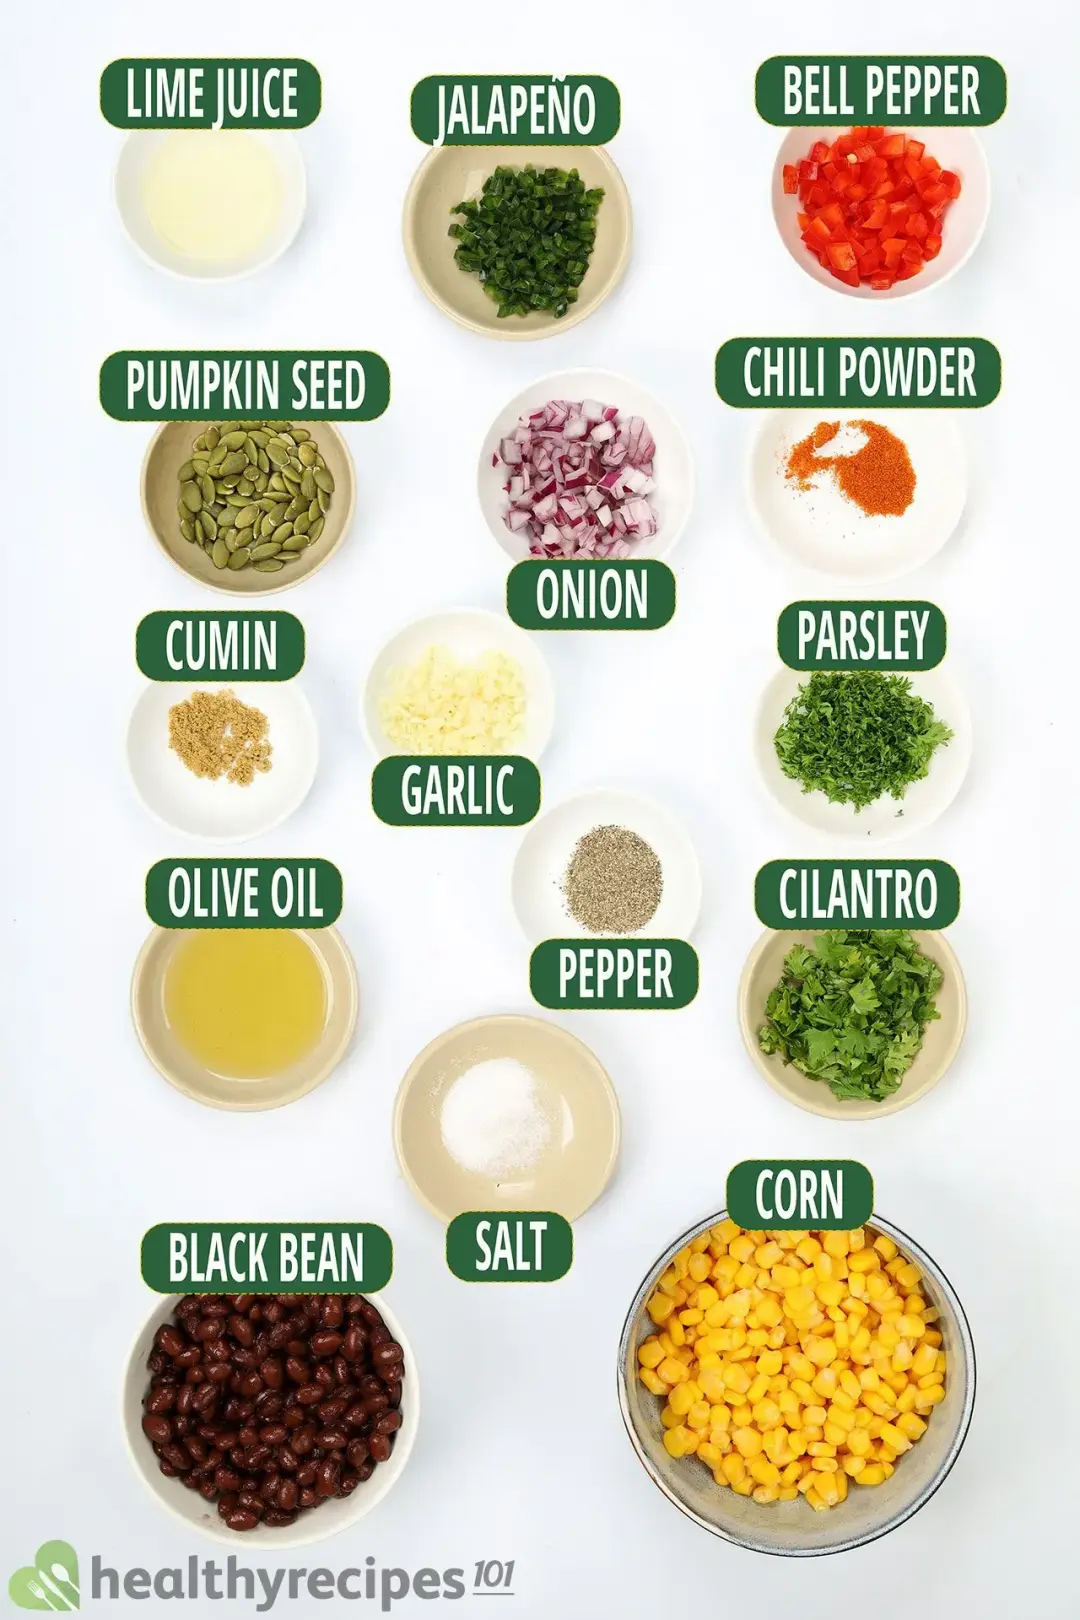 Ingredients for Corn Black Bean Salad